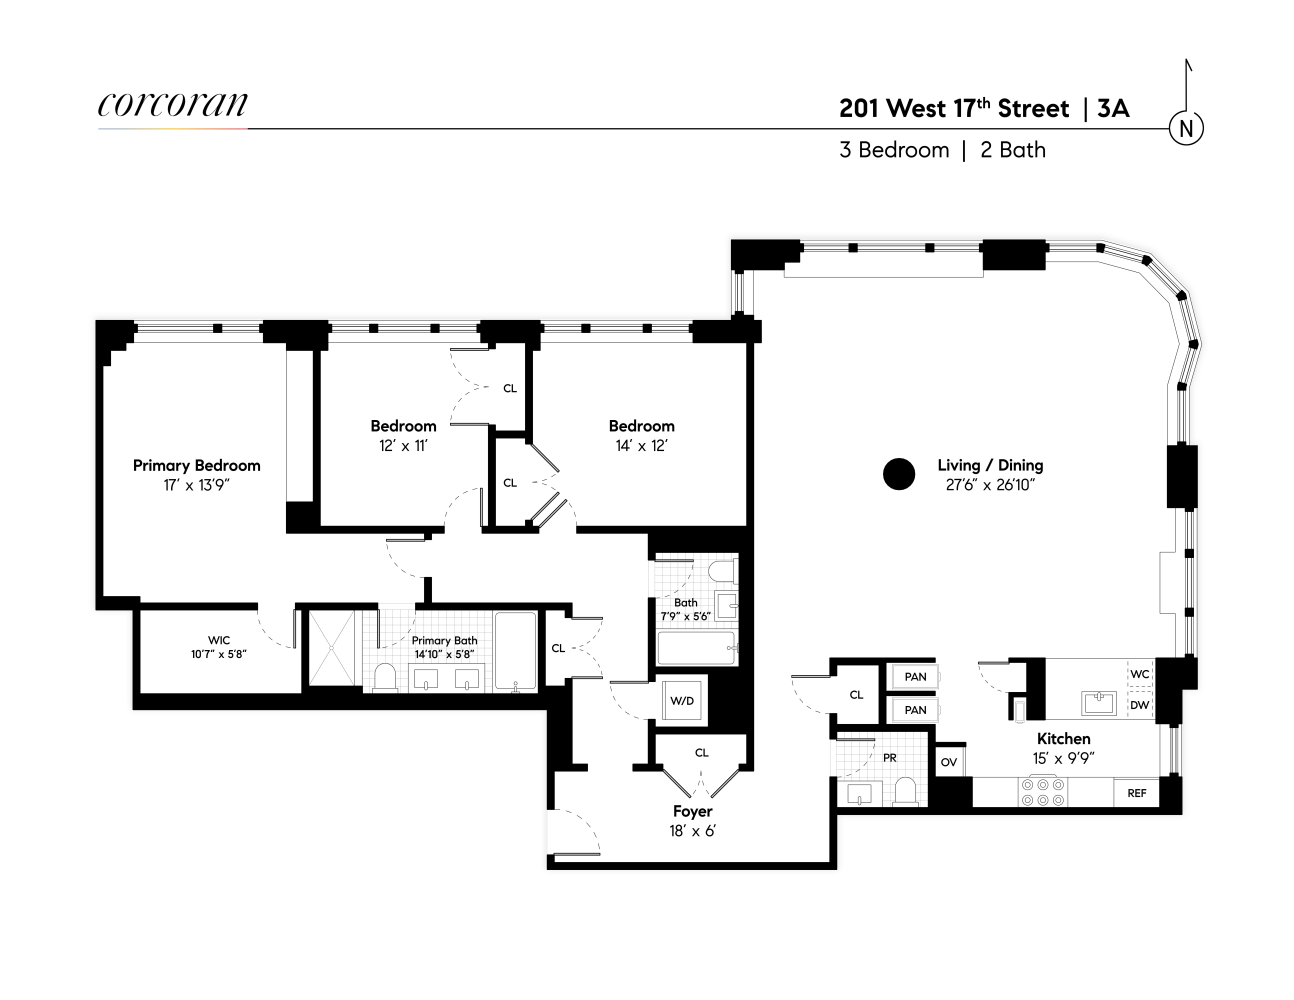 Floorplan for 201 West 17th Street, 3A